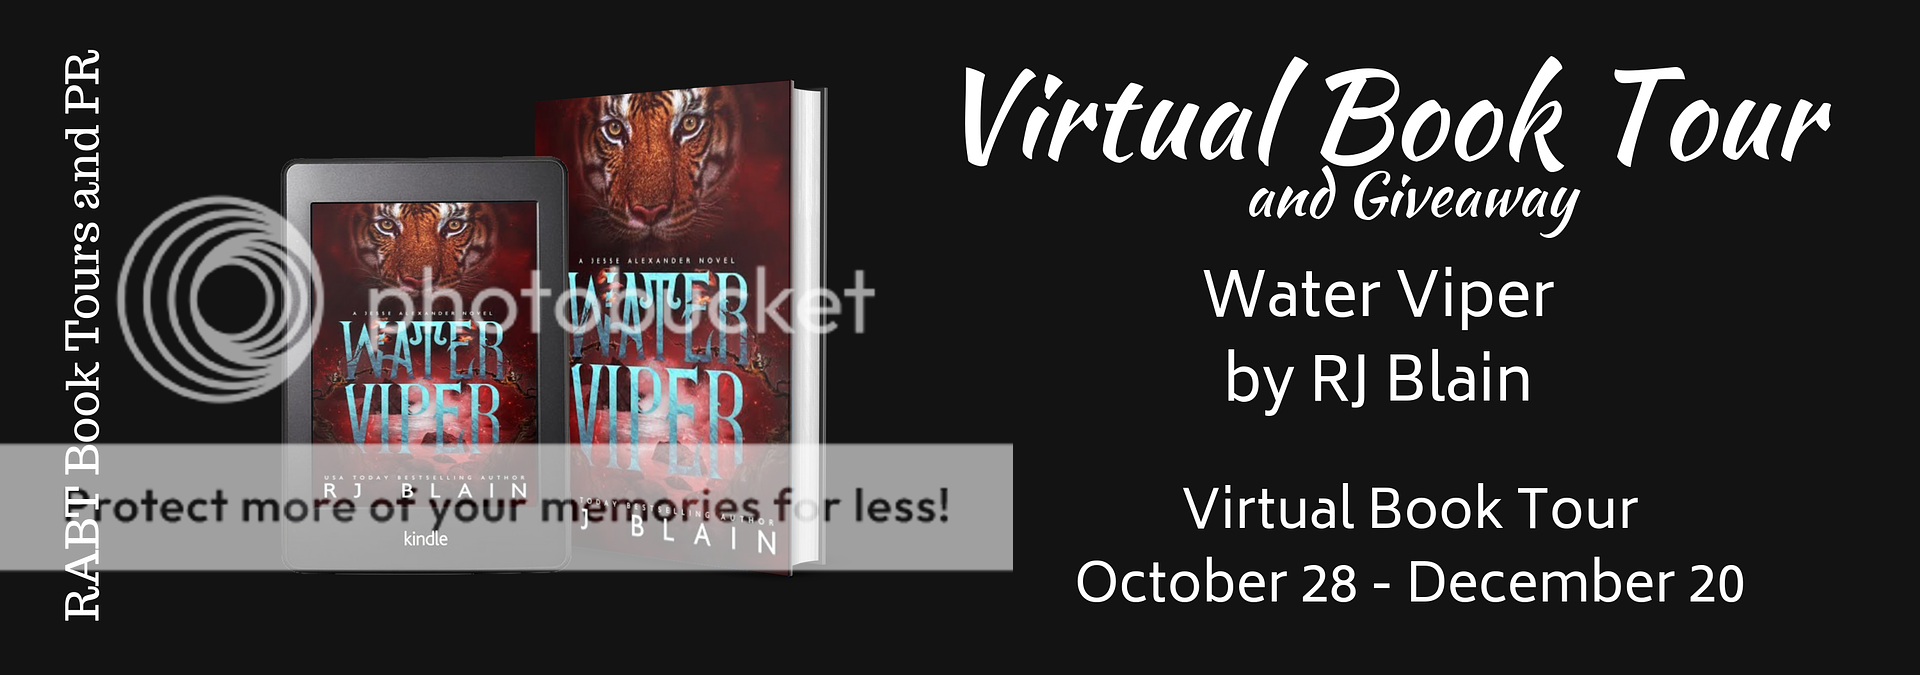 Virtual Book Tour: Water Viper by RJ Blain #blogtour #interview #urbanfantasy #fantasy #paranormal #giveaway @RABTBookTours @SneakyBookLady